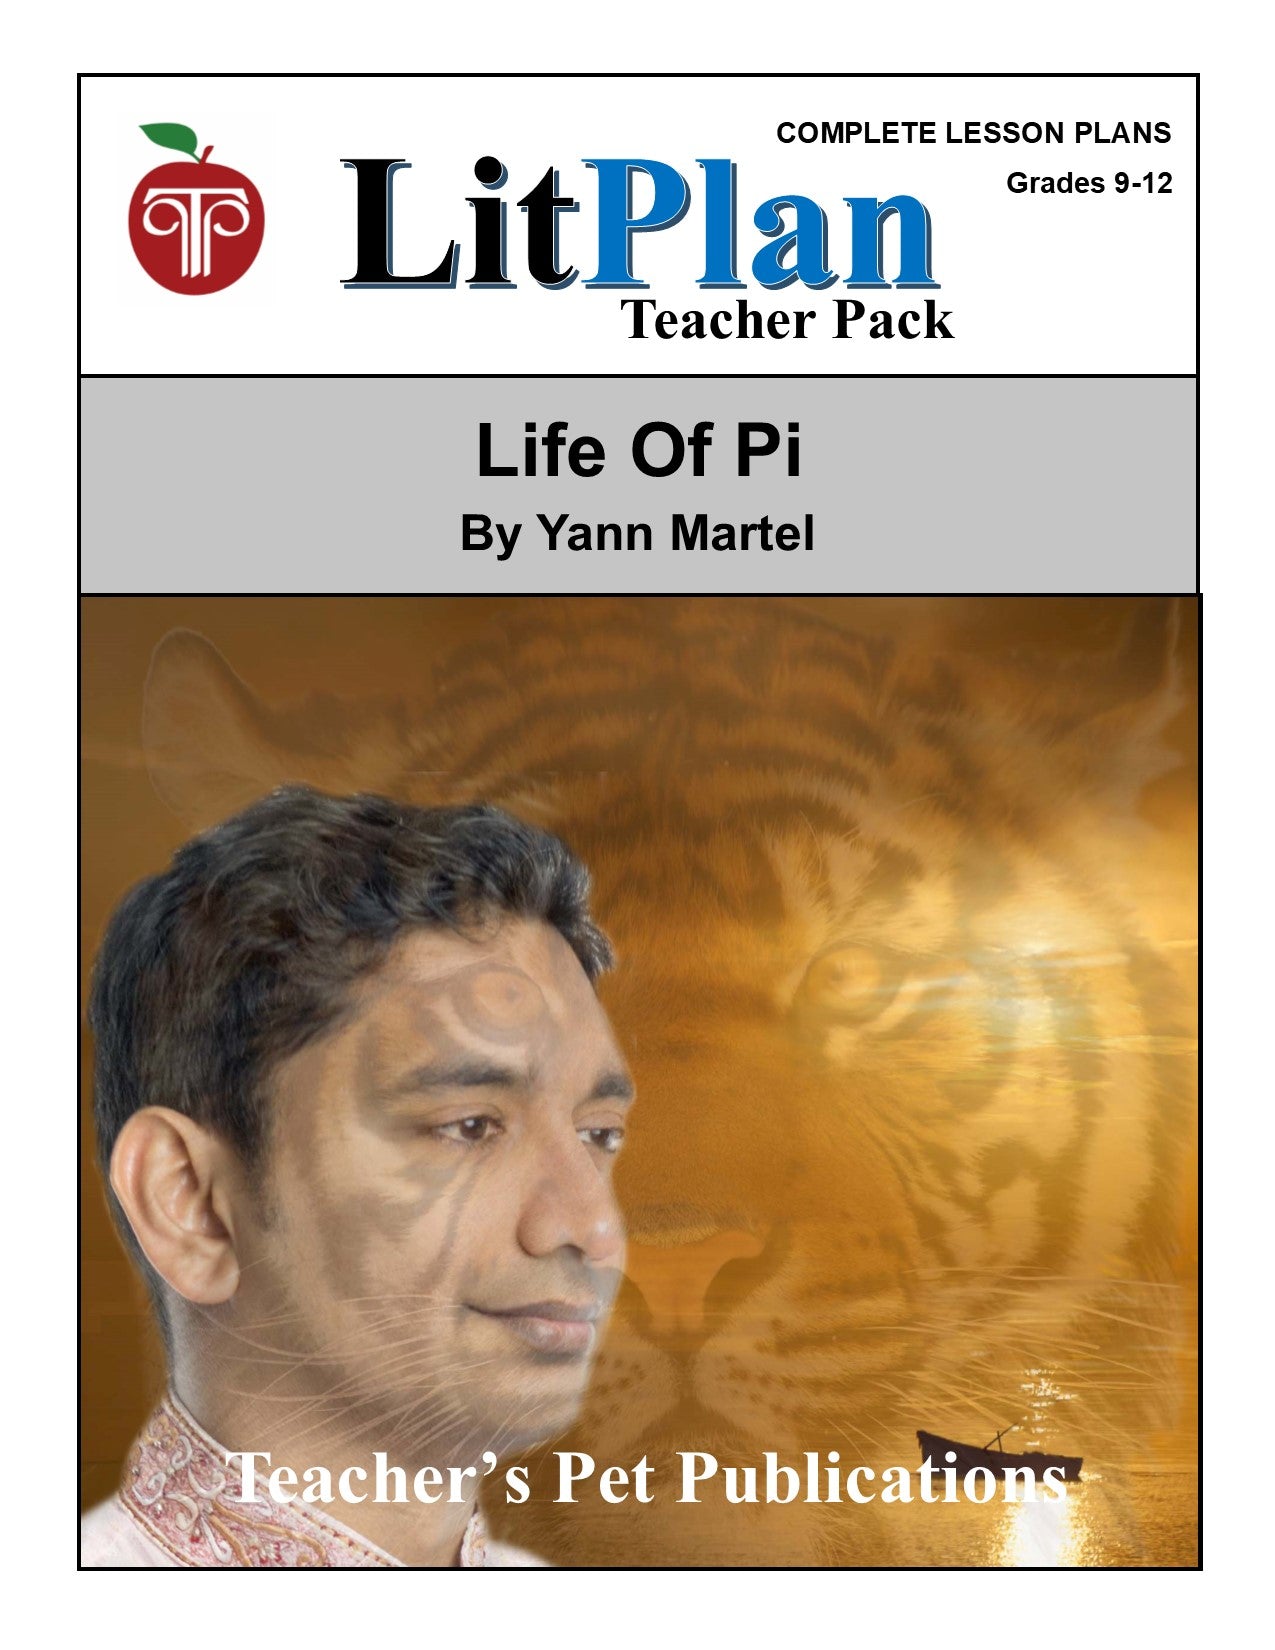 Life of Pi: LitPlan Teacher Pack Grades 9-12